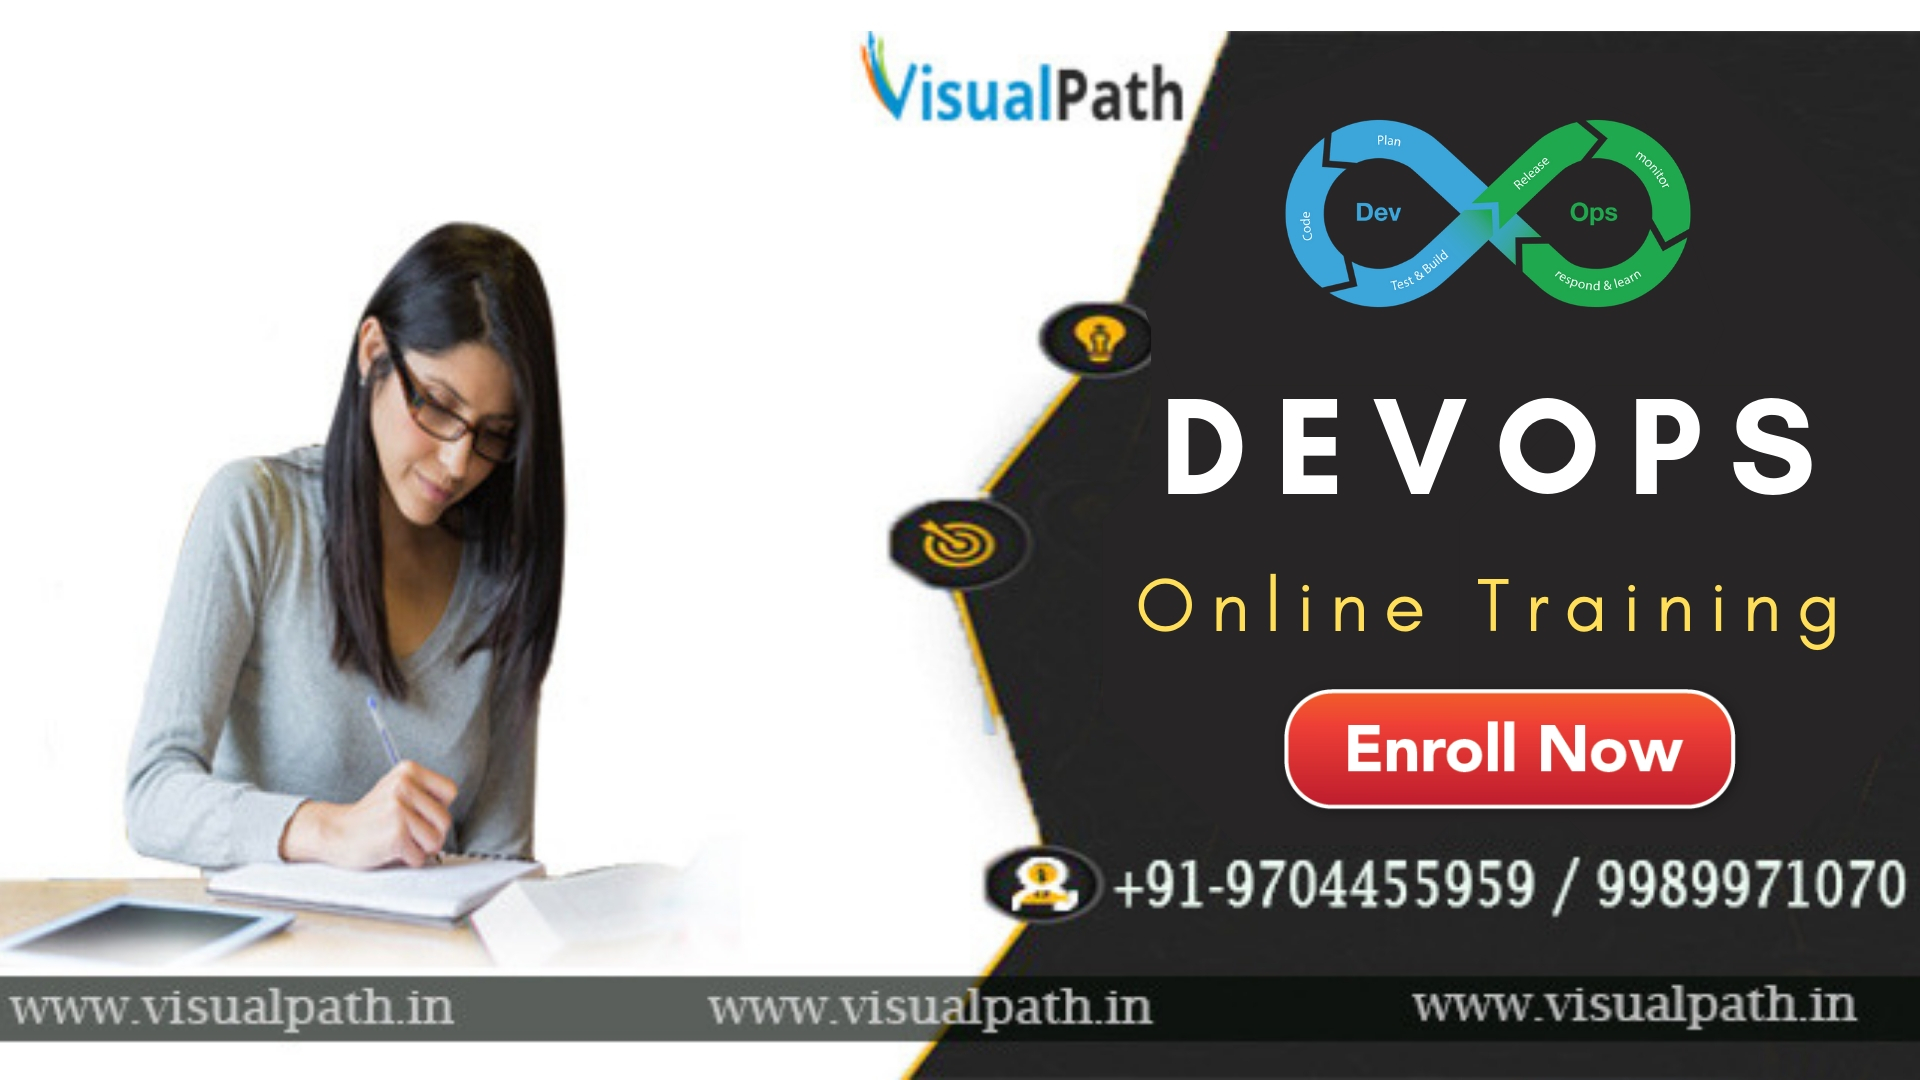 Devops Training Online in Hyderabad | Devops Training Classes, Hyderabad, Andhra Pradesh, India